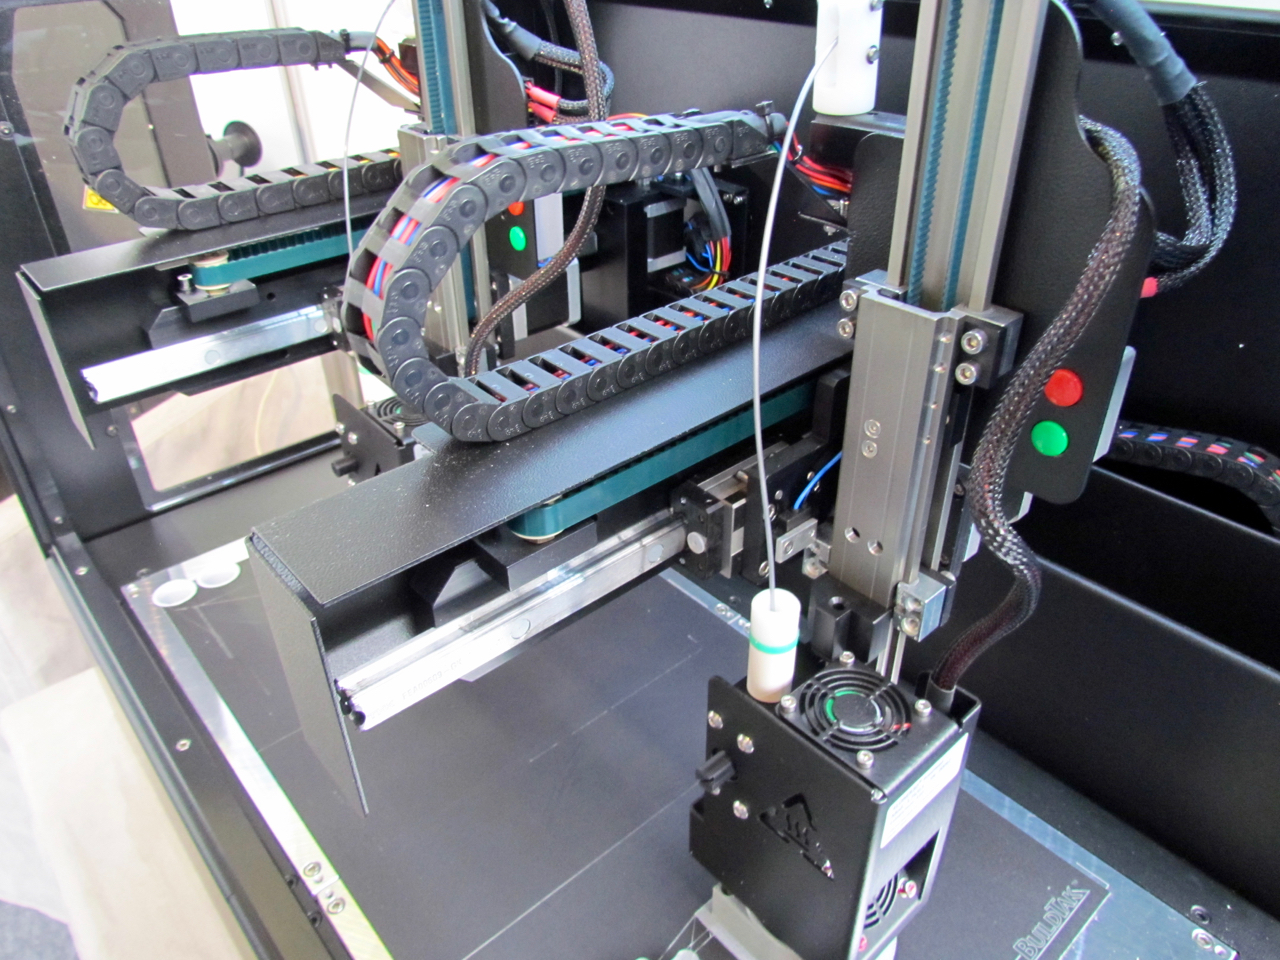  The Kloner3D desktop 3D printer's dual extruders 